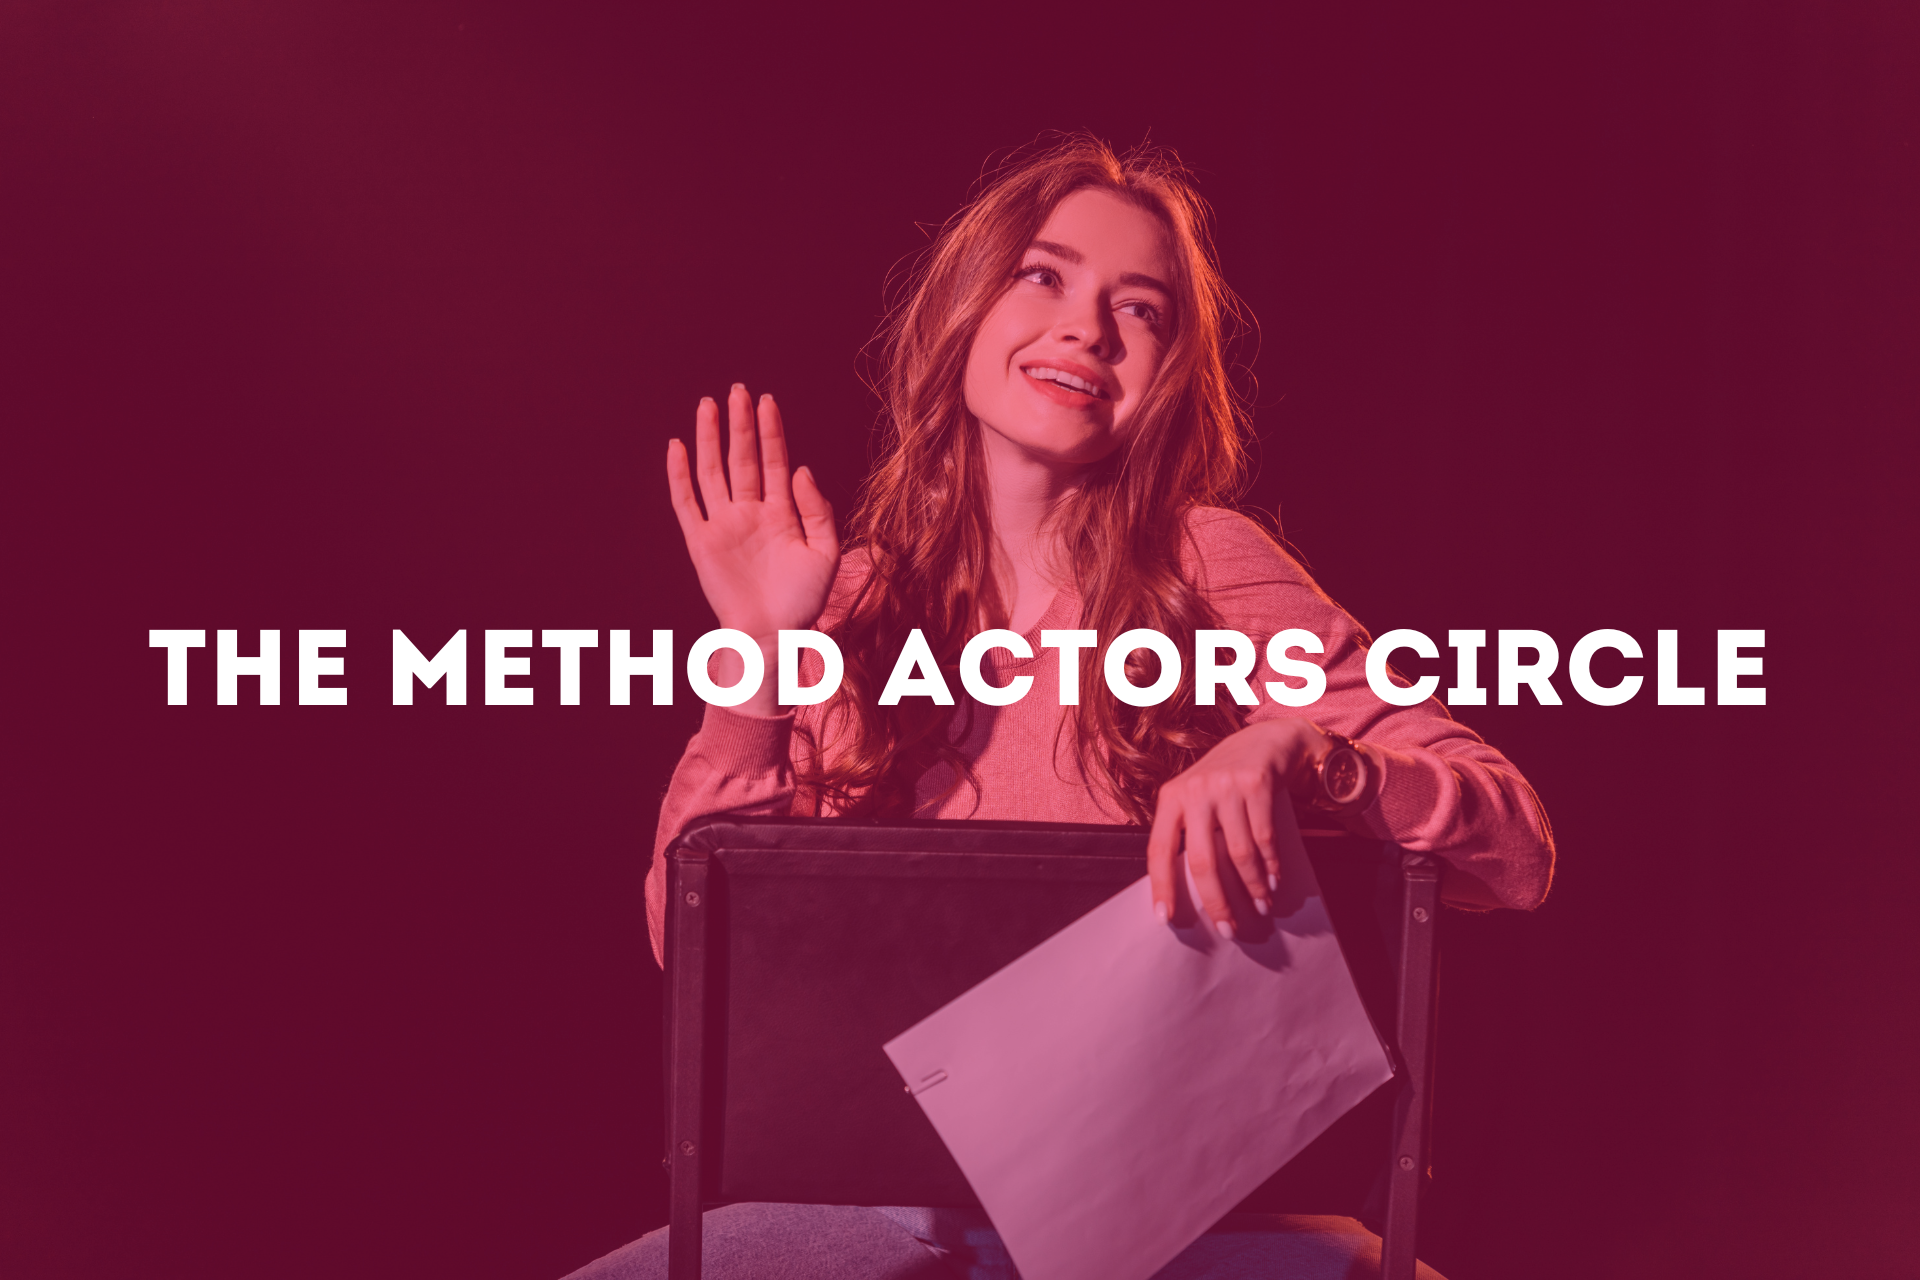 The Method Actors Circle